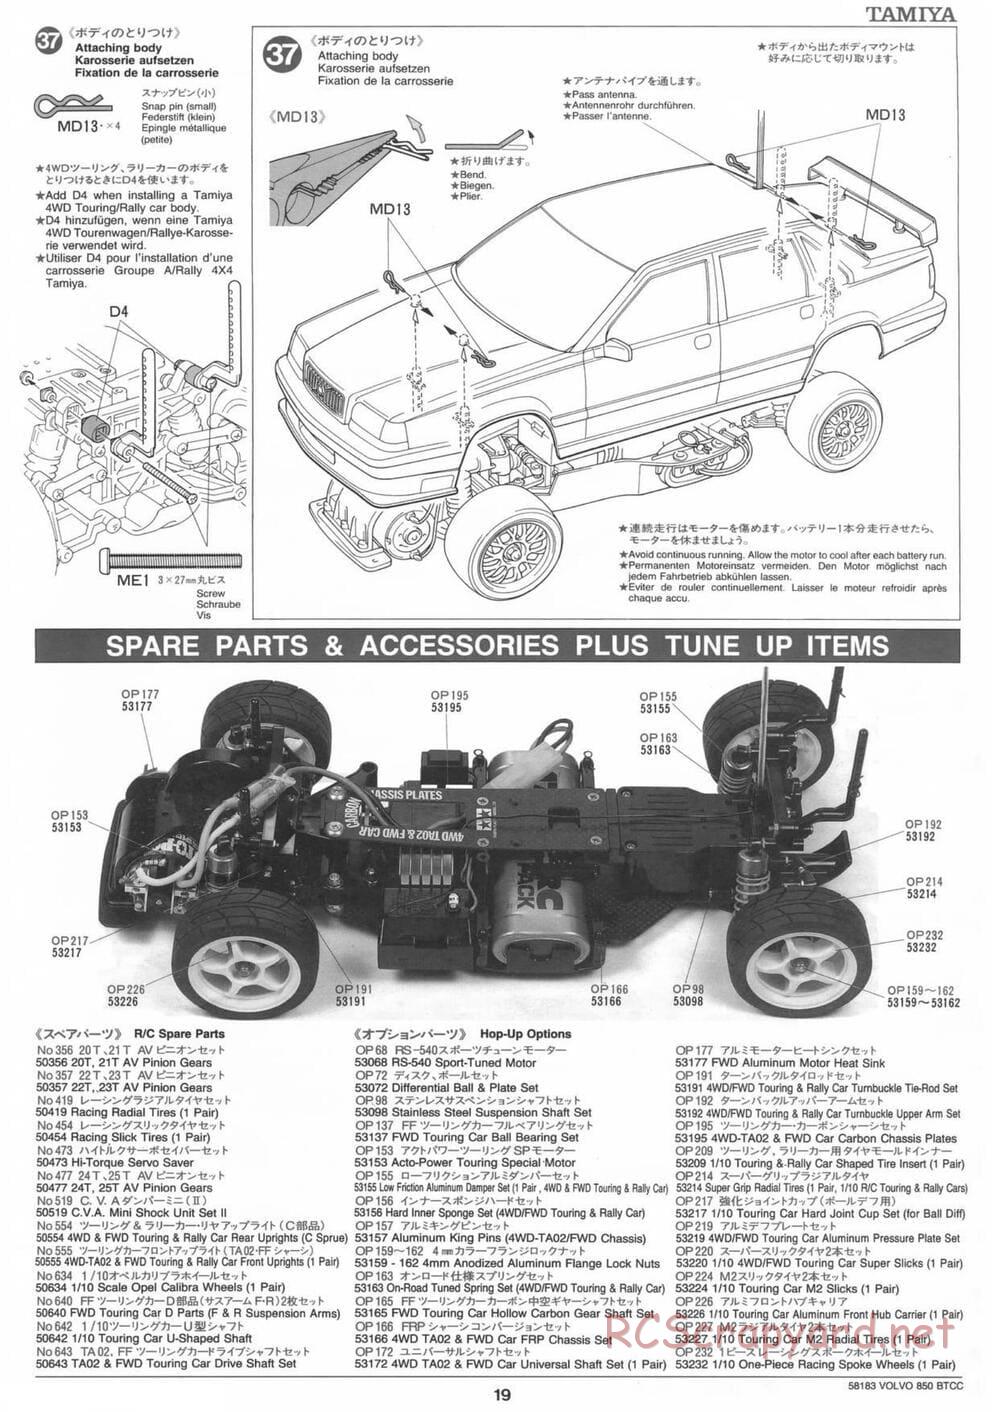 Tamiya - Volvo 850 BTCC - FF-01 Chassis - Manual - Page 19